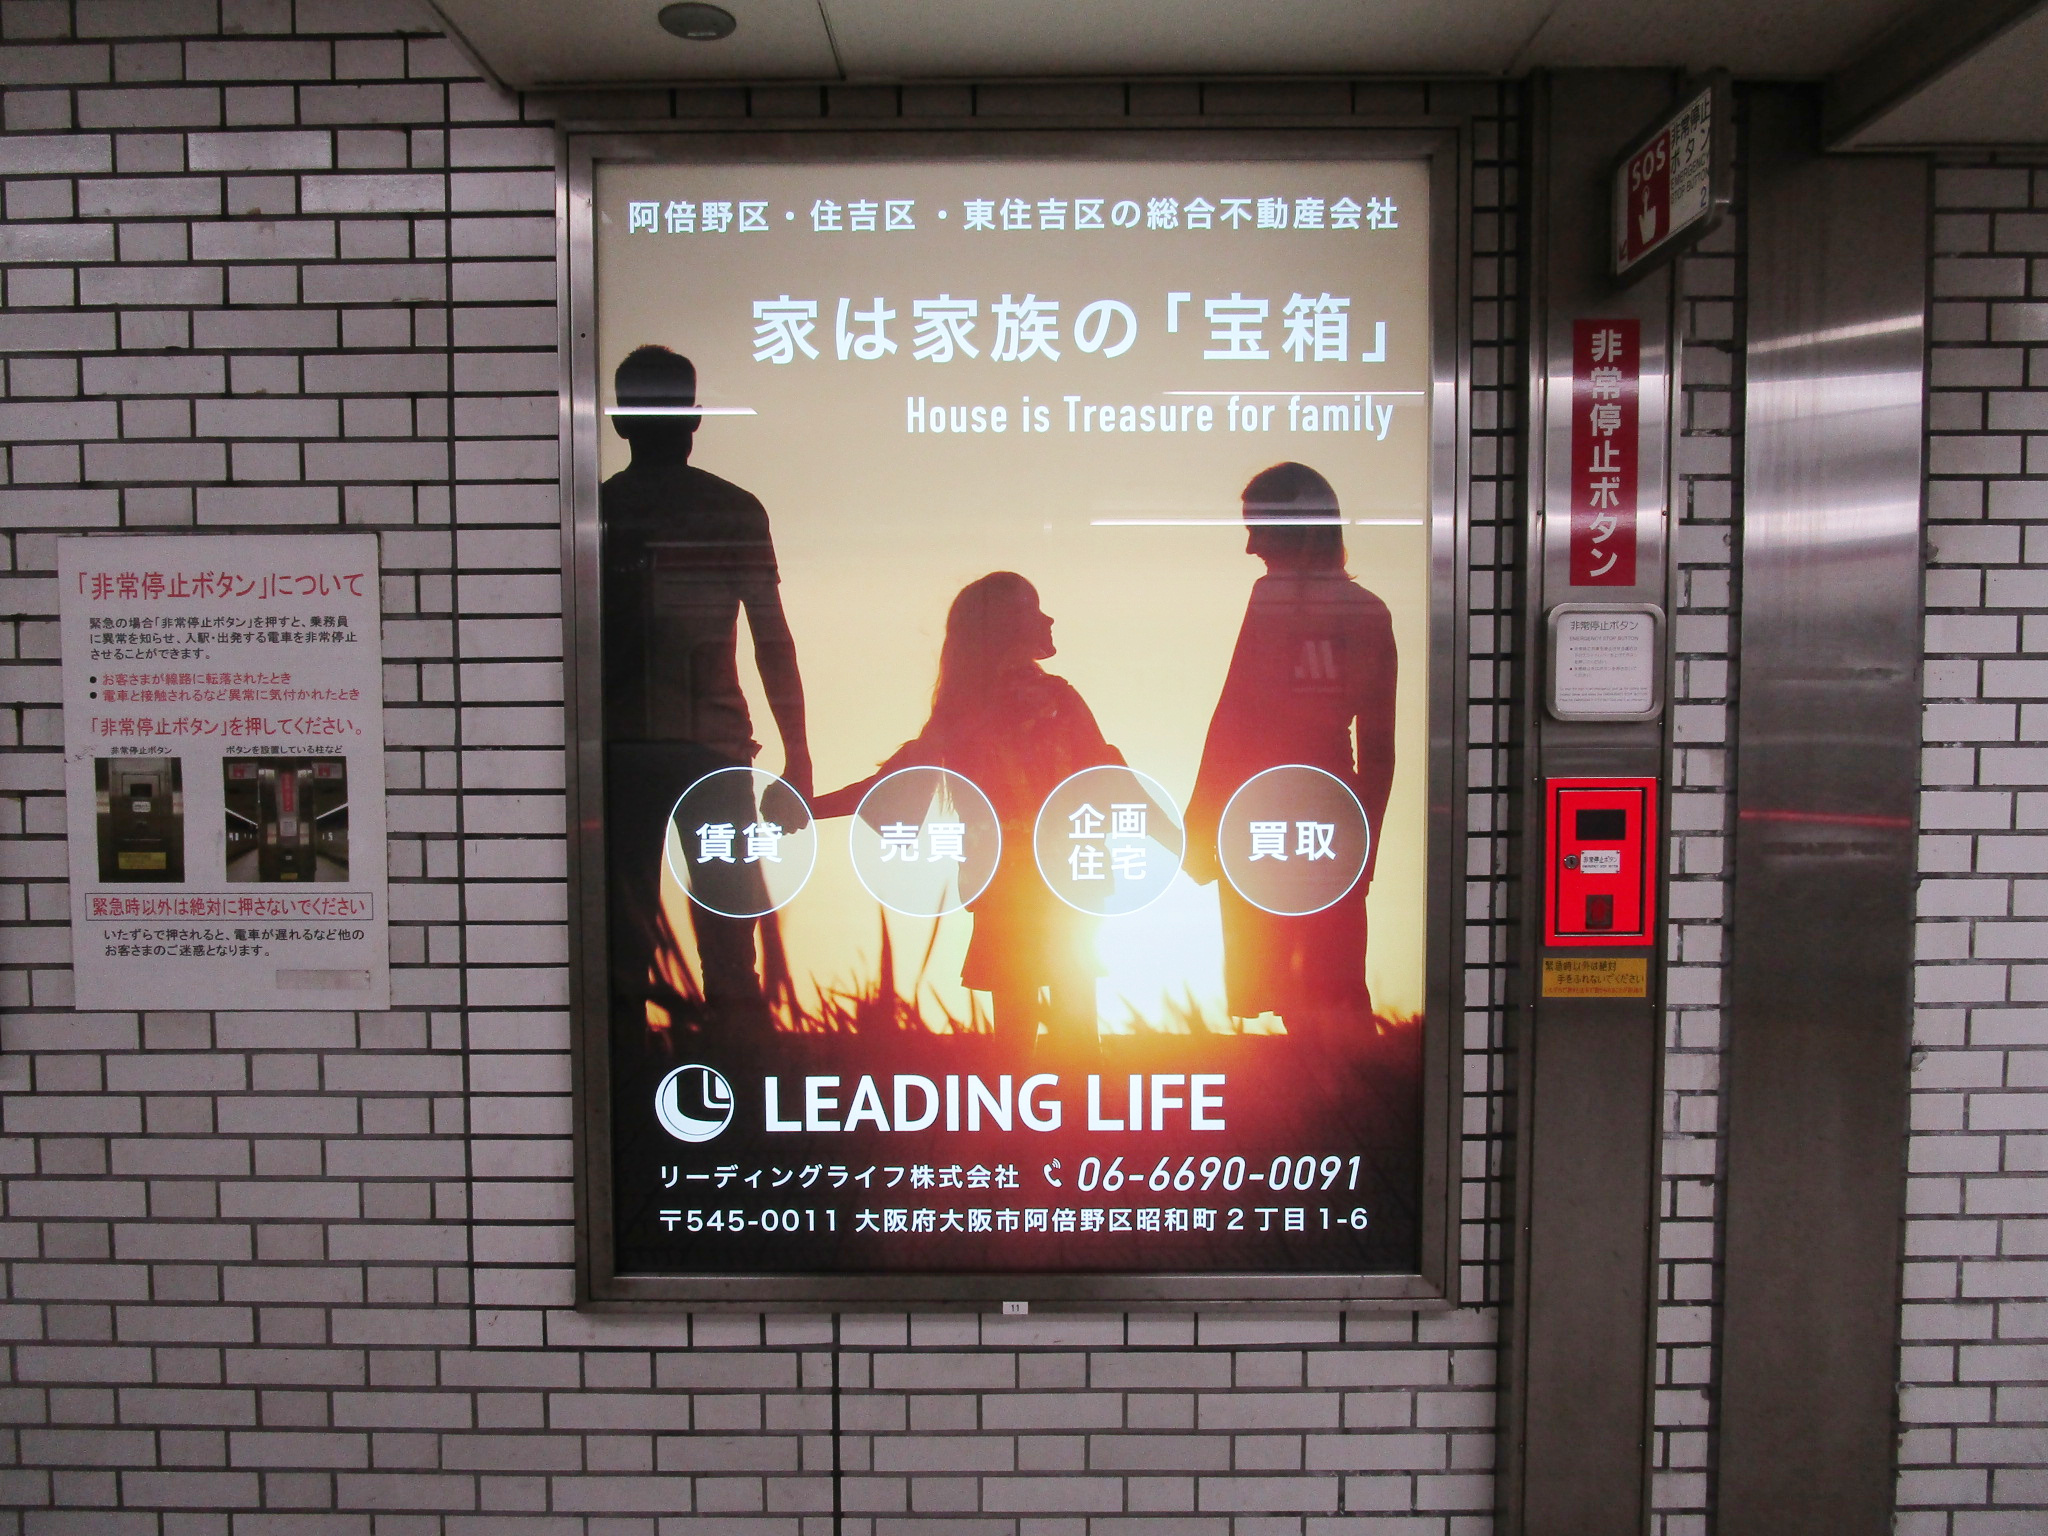 Osaka Metro昭和町駅 駅看板